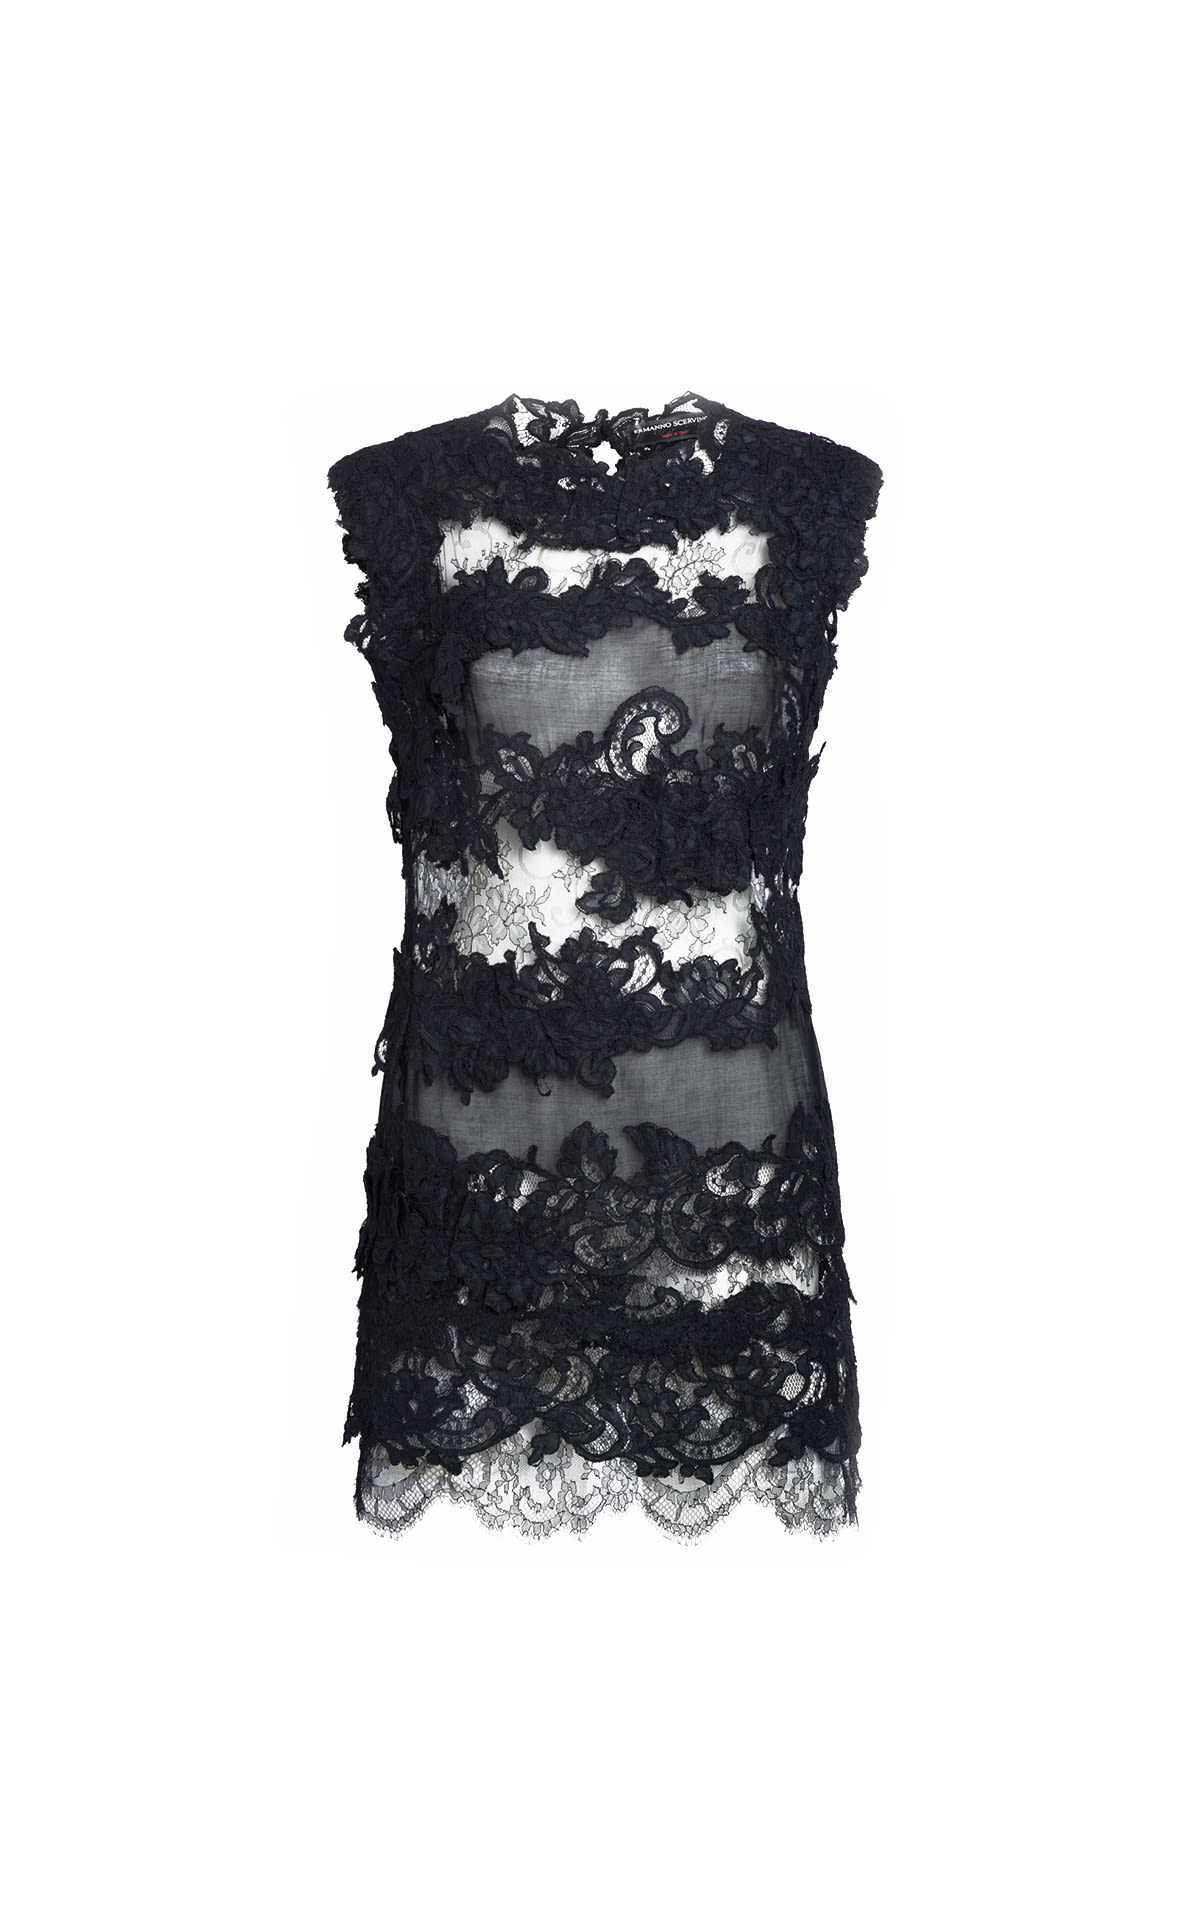 Short dress in black lace